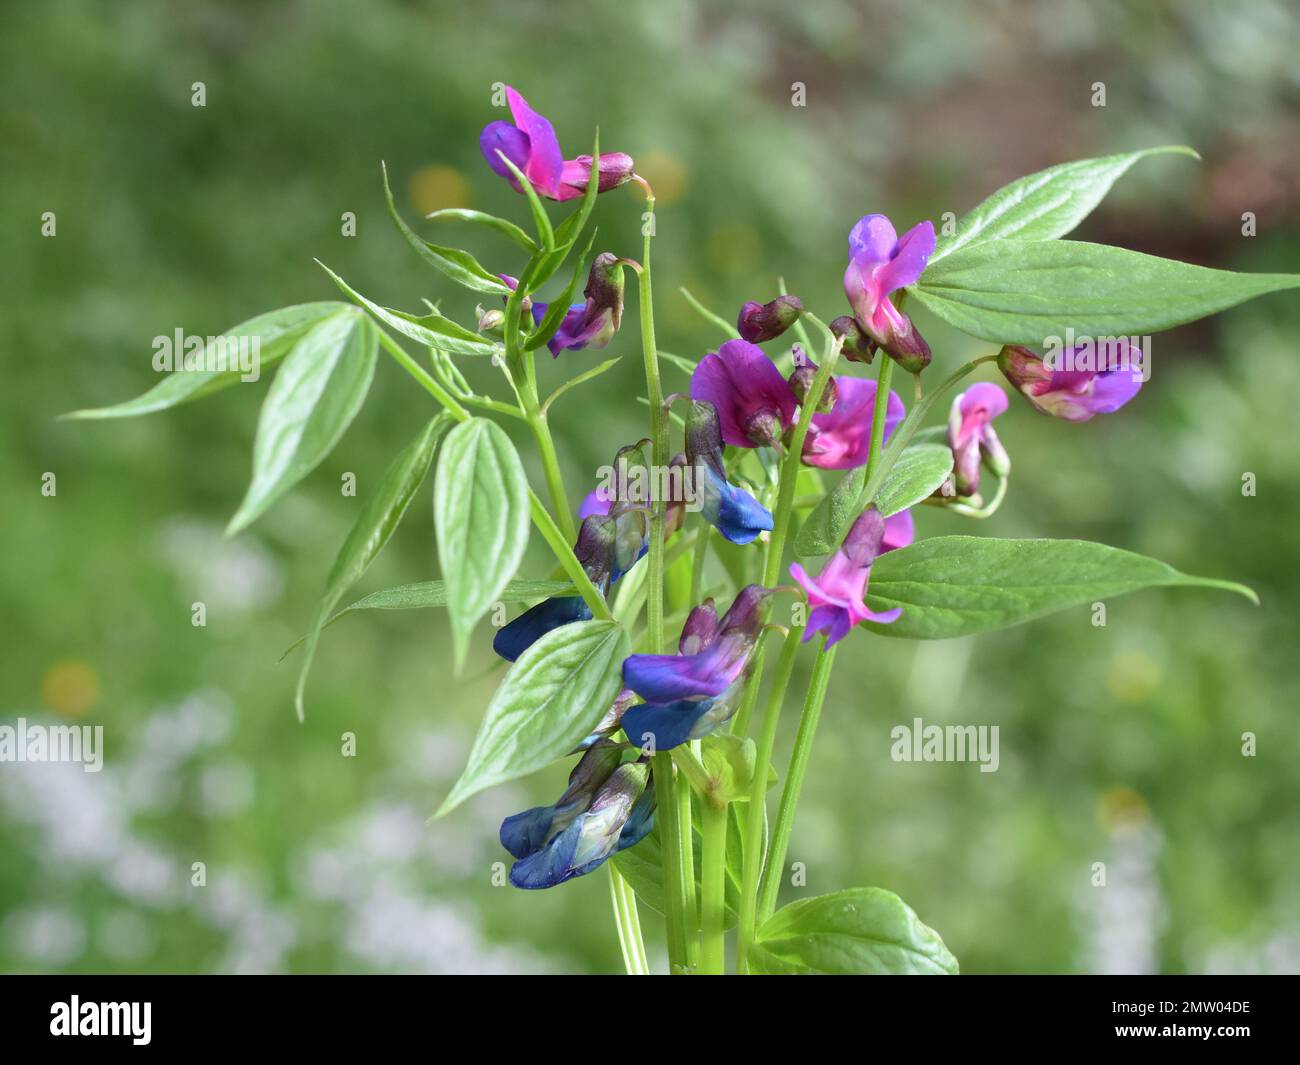 Blue and purple flowers on a Lathyrus vernus spring pea plant Stock Photo